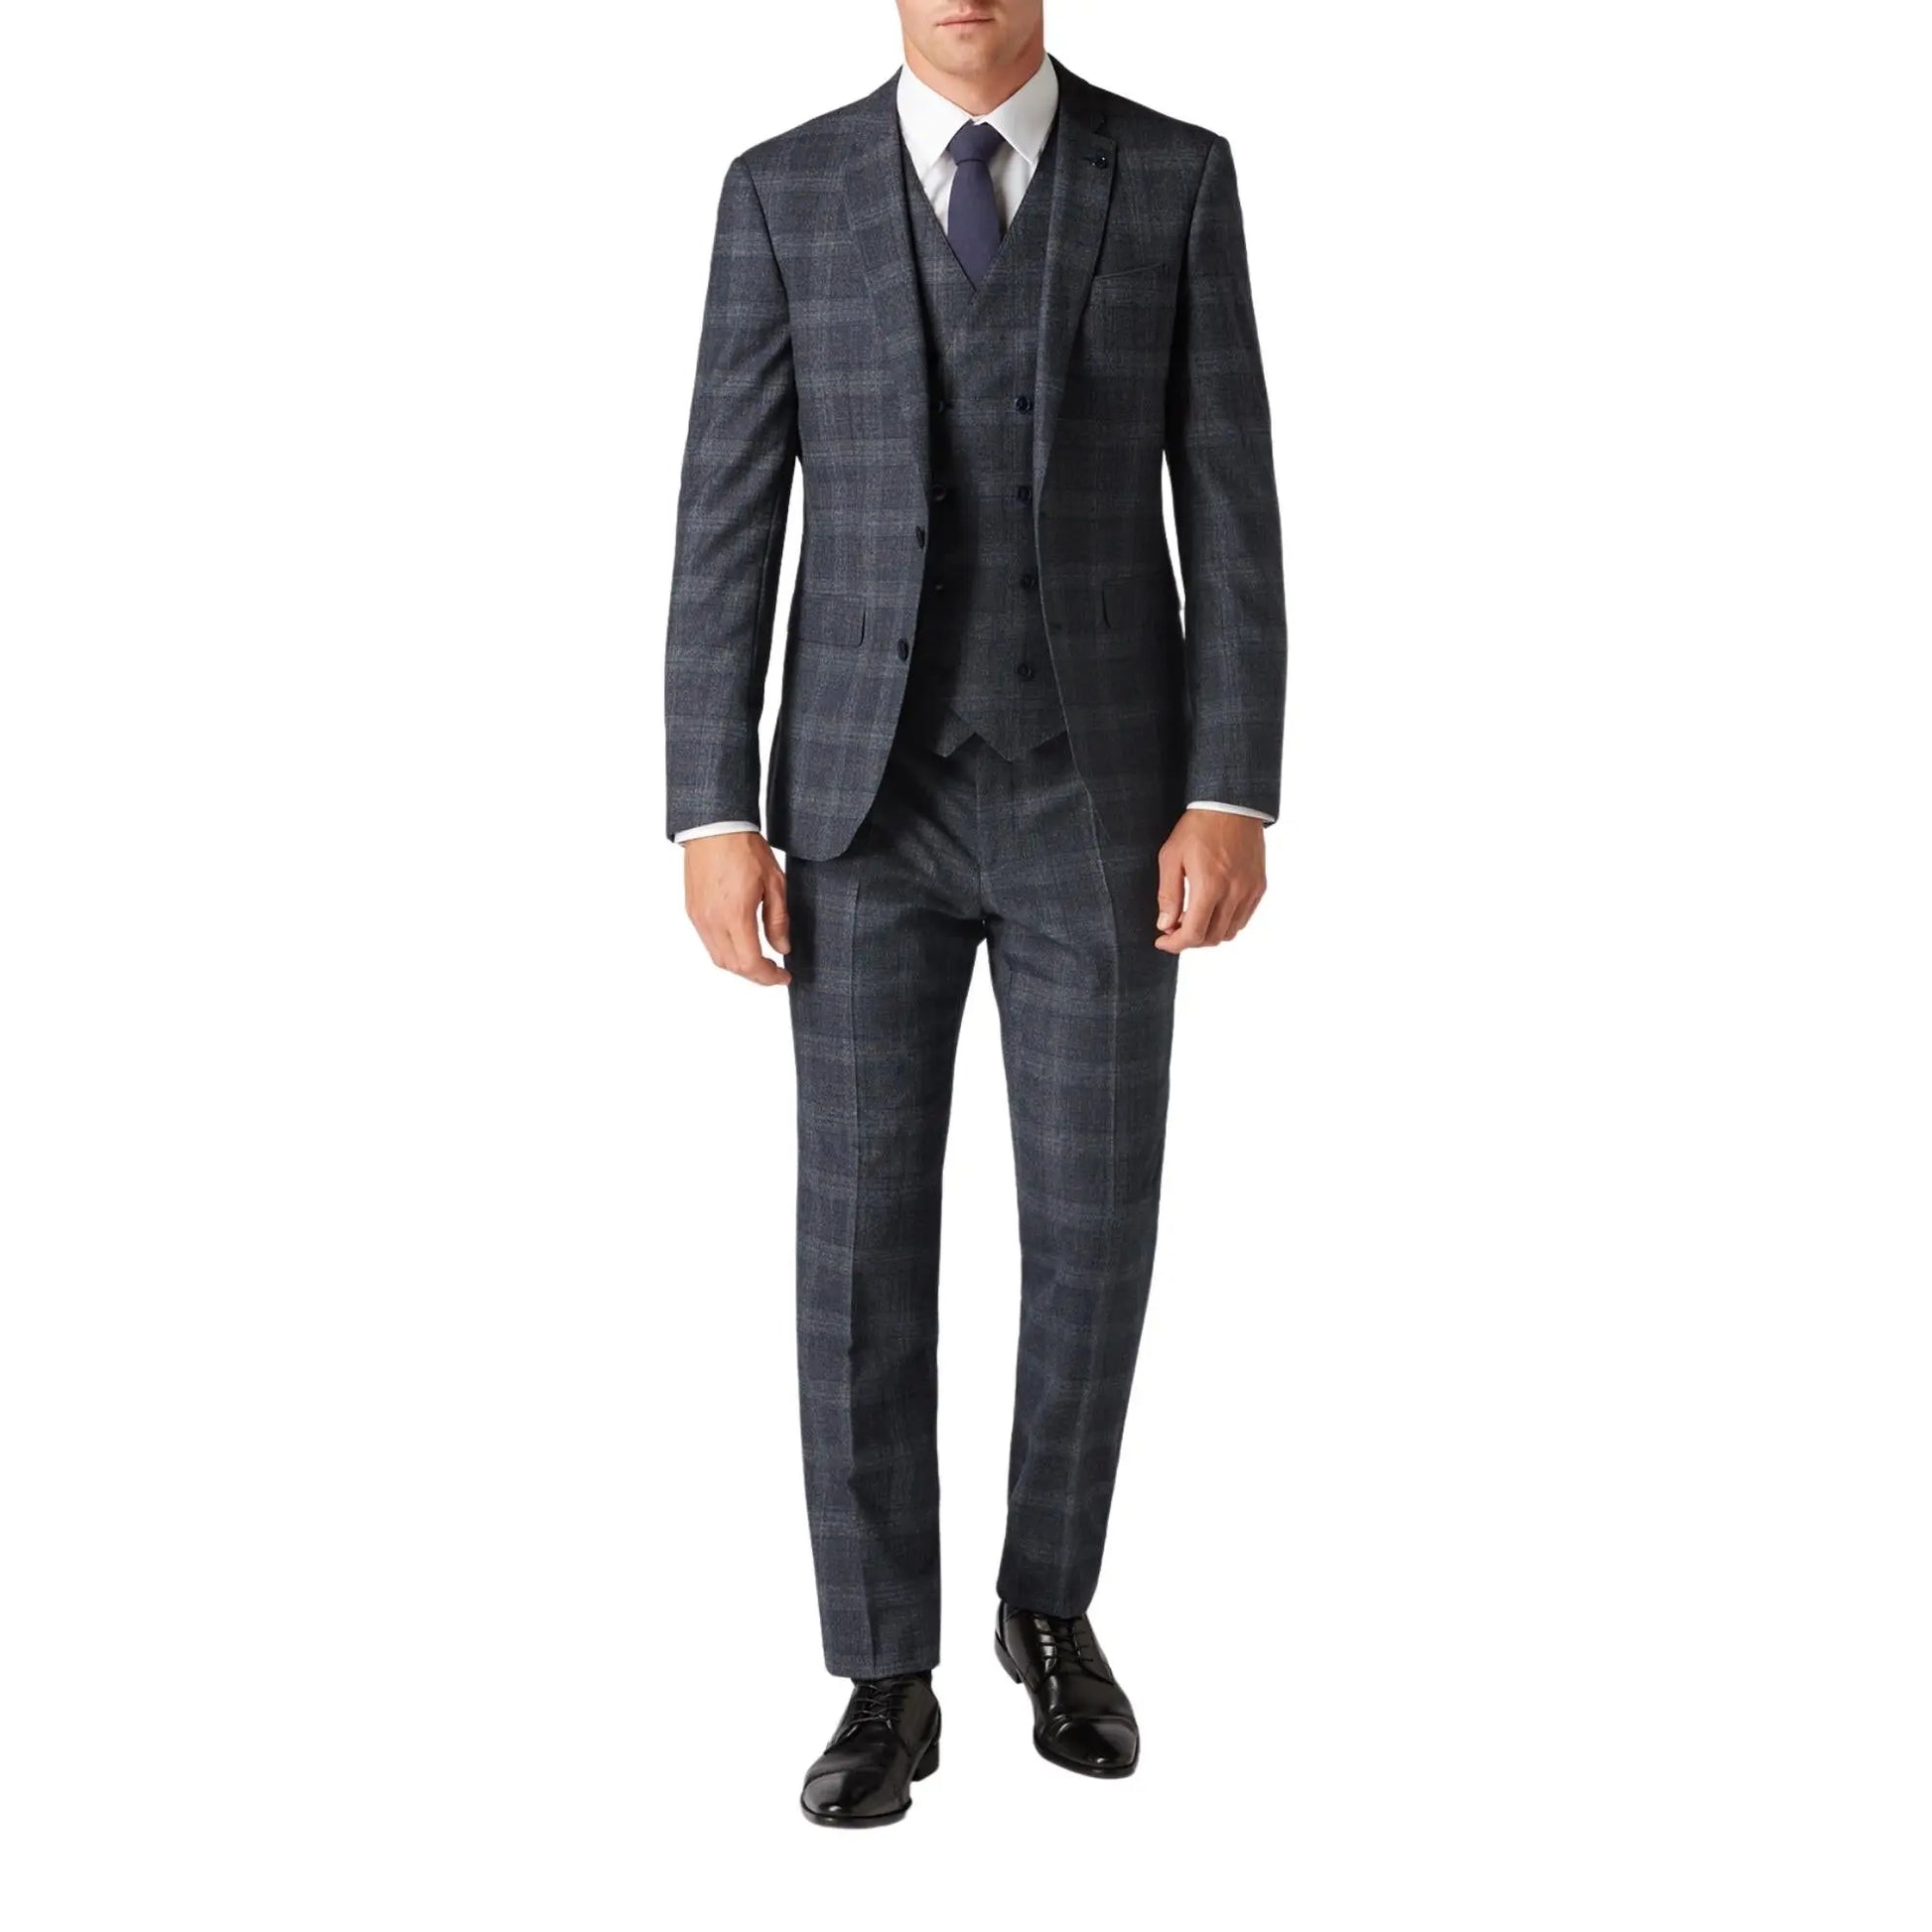 Buy Remus Uomo Larenzo Check Suit Jacket - Dark Grey | Suit Jacketss at Woven Durham